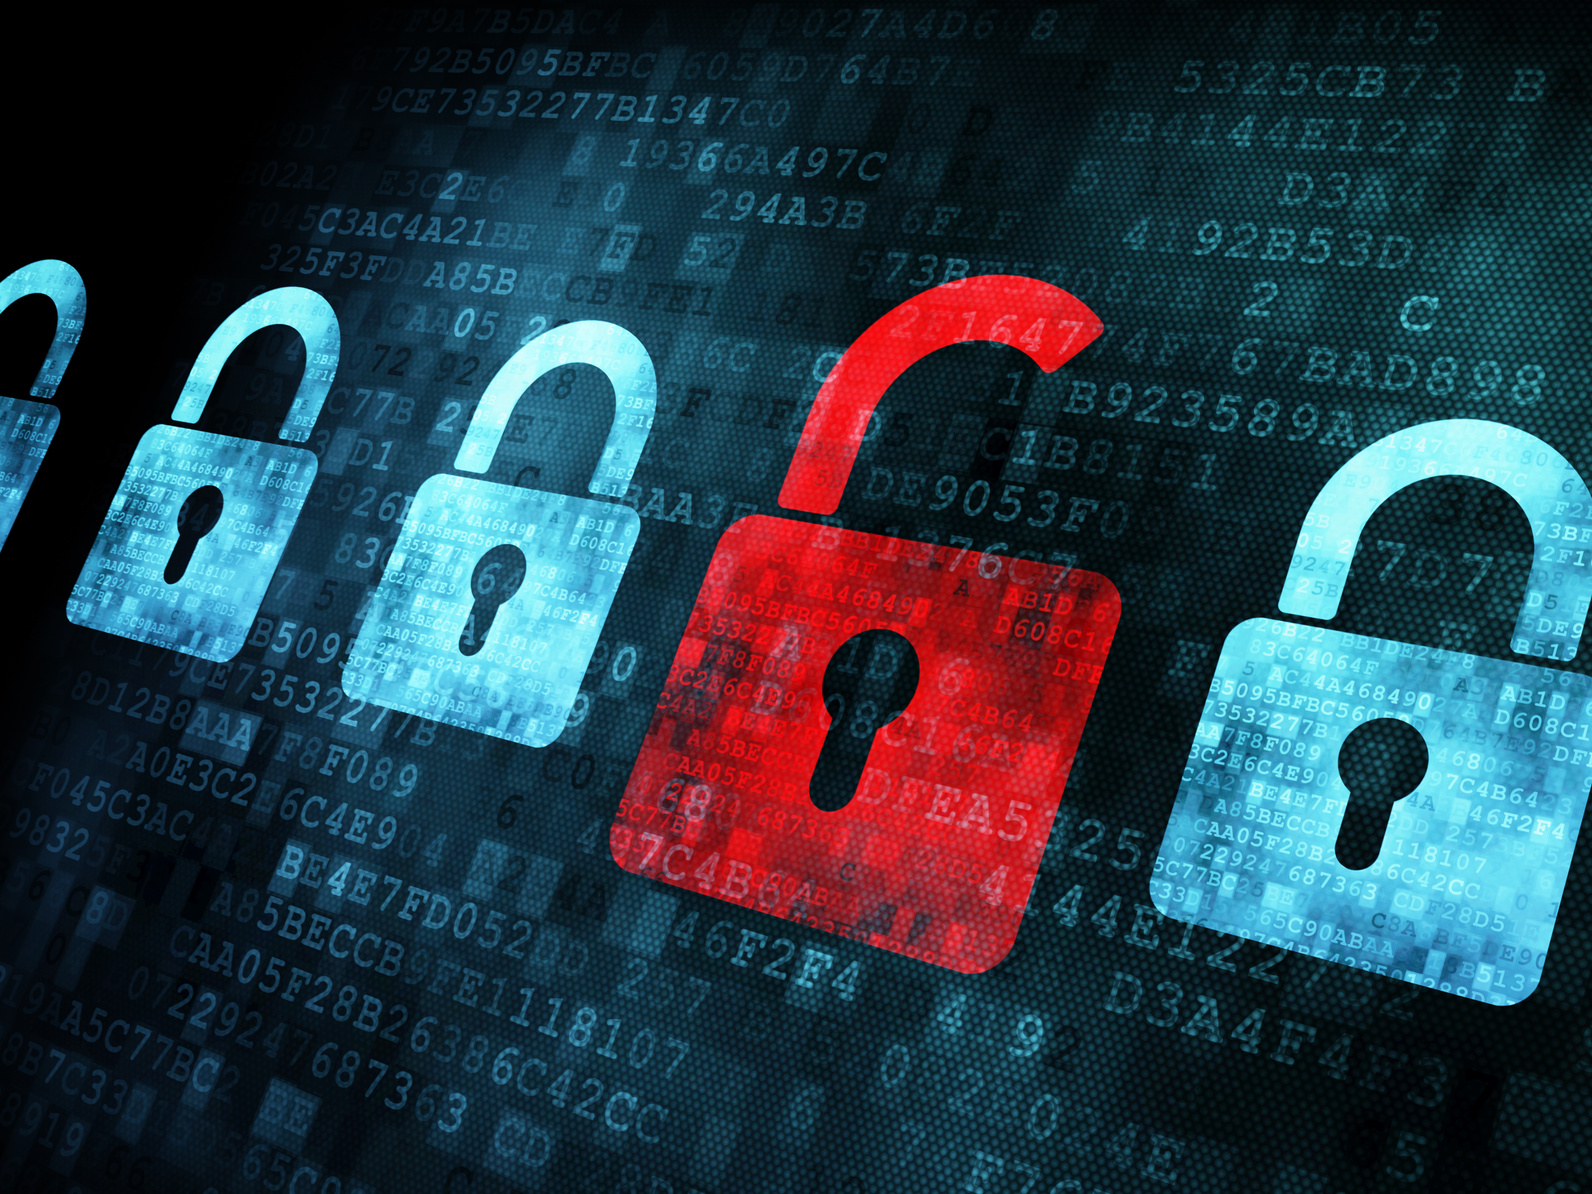 Dozens of secret and Top secret databases vulnerable to hack